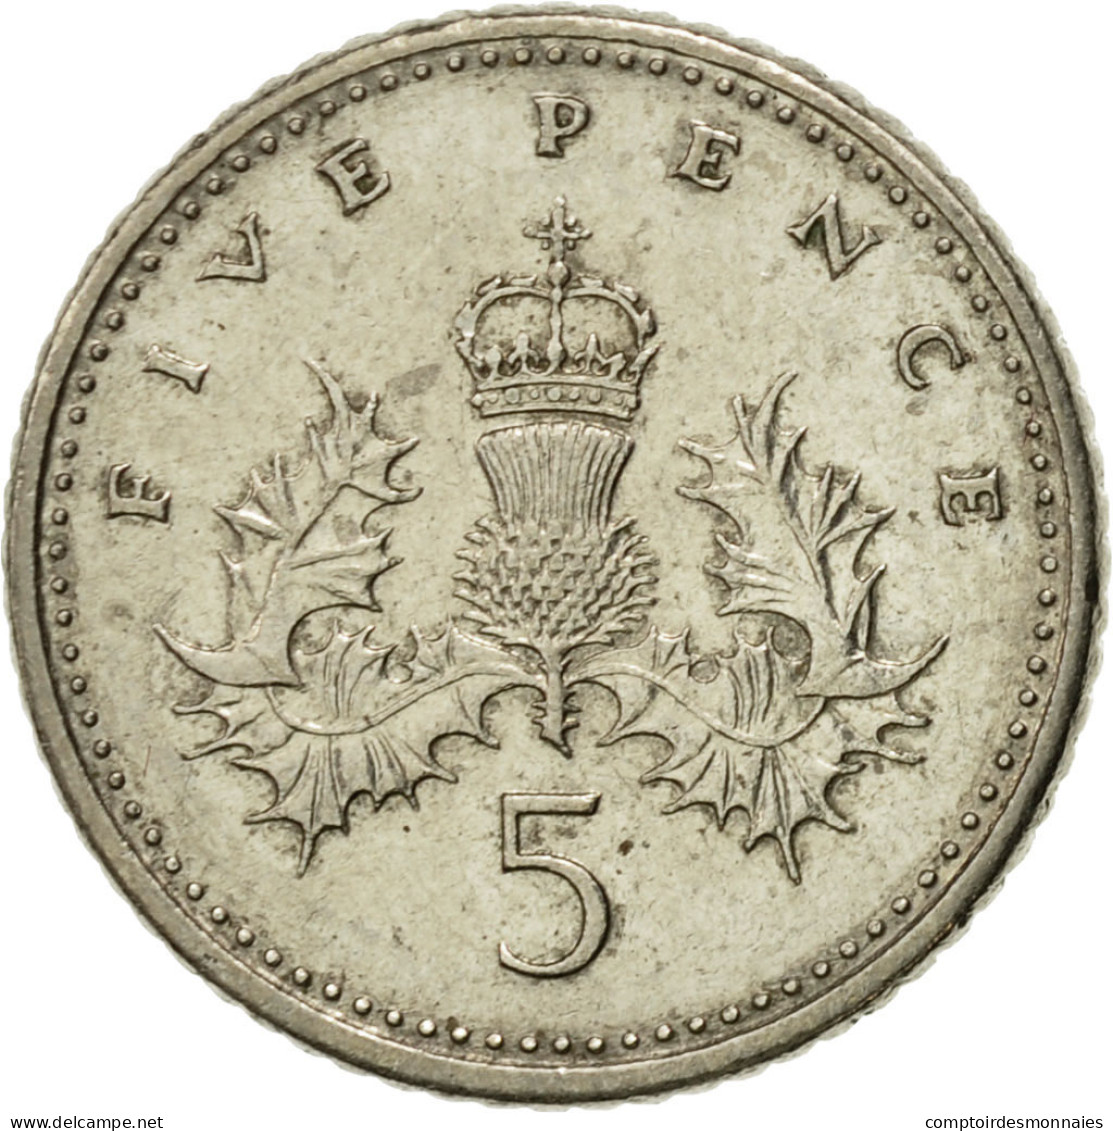 Monnaie, Grande-Bretagne, Elizabeth II, 5 Pence, 1990, TTB, Copper-nickel - 5 Pence & 5 New Pence